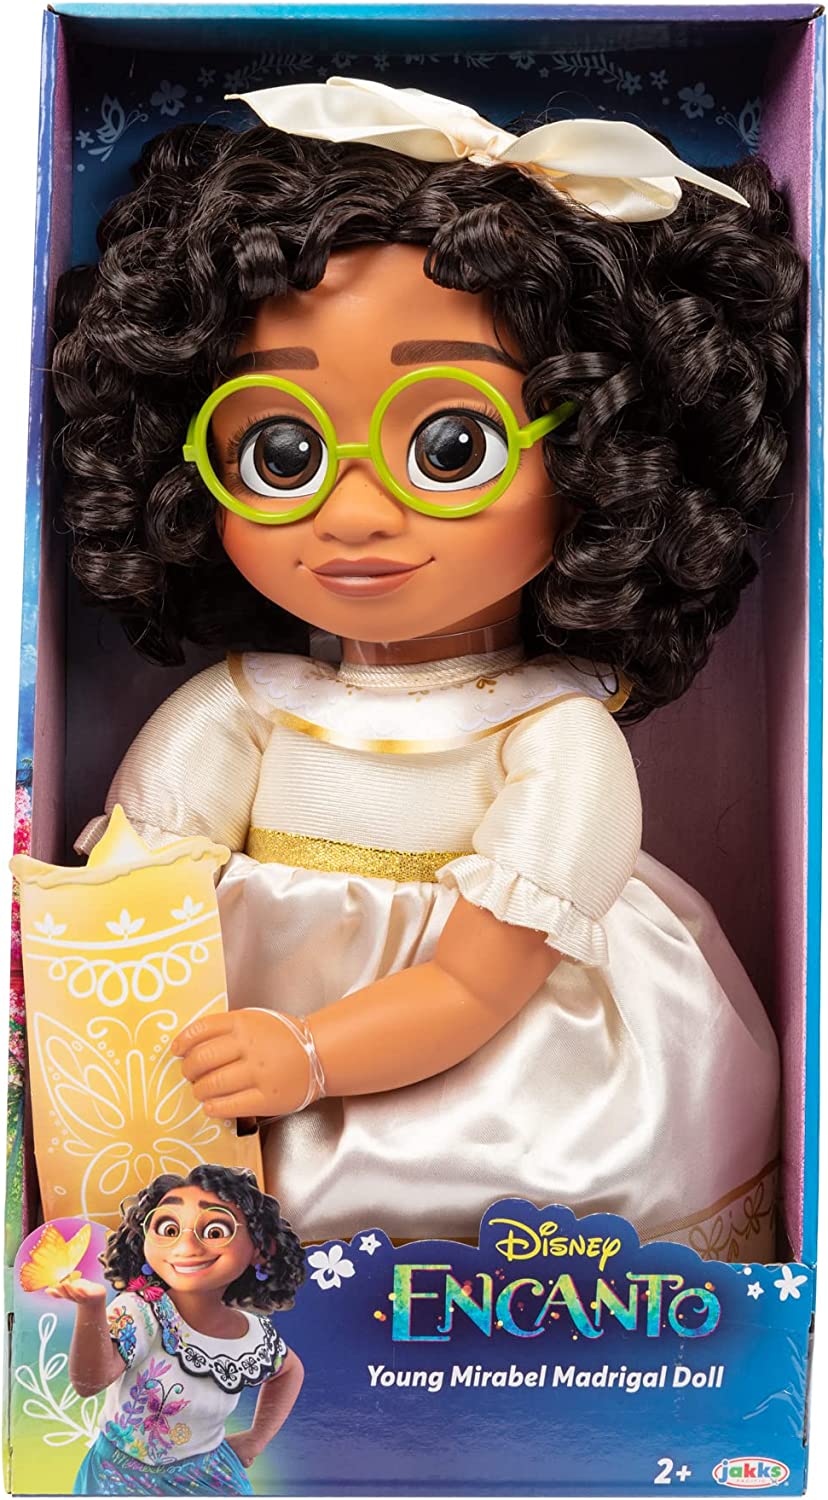 Disney Encanto Young Mirabel doll from Jakks